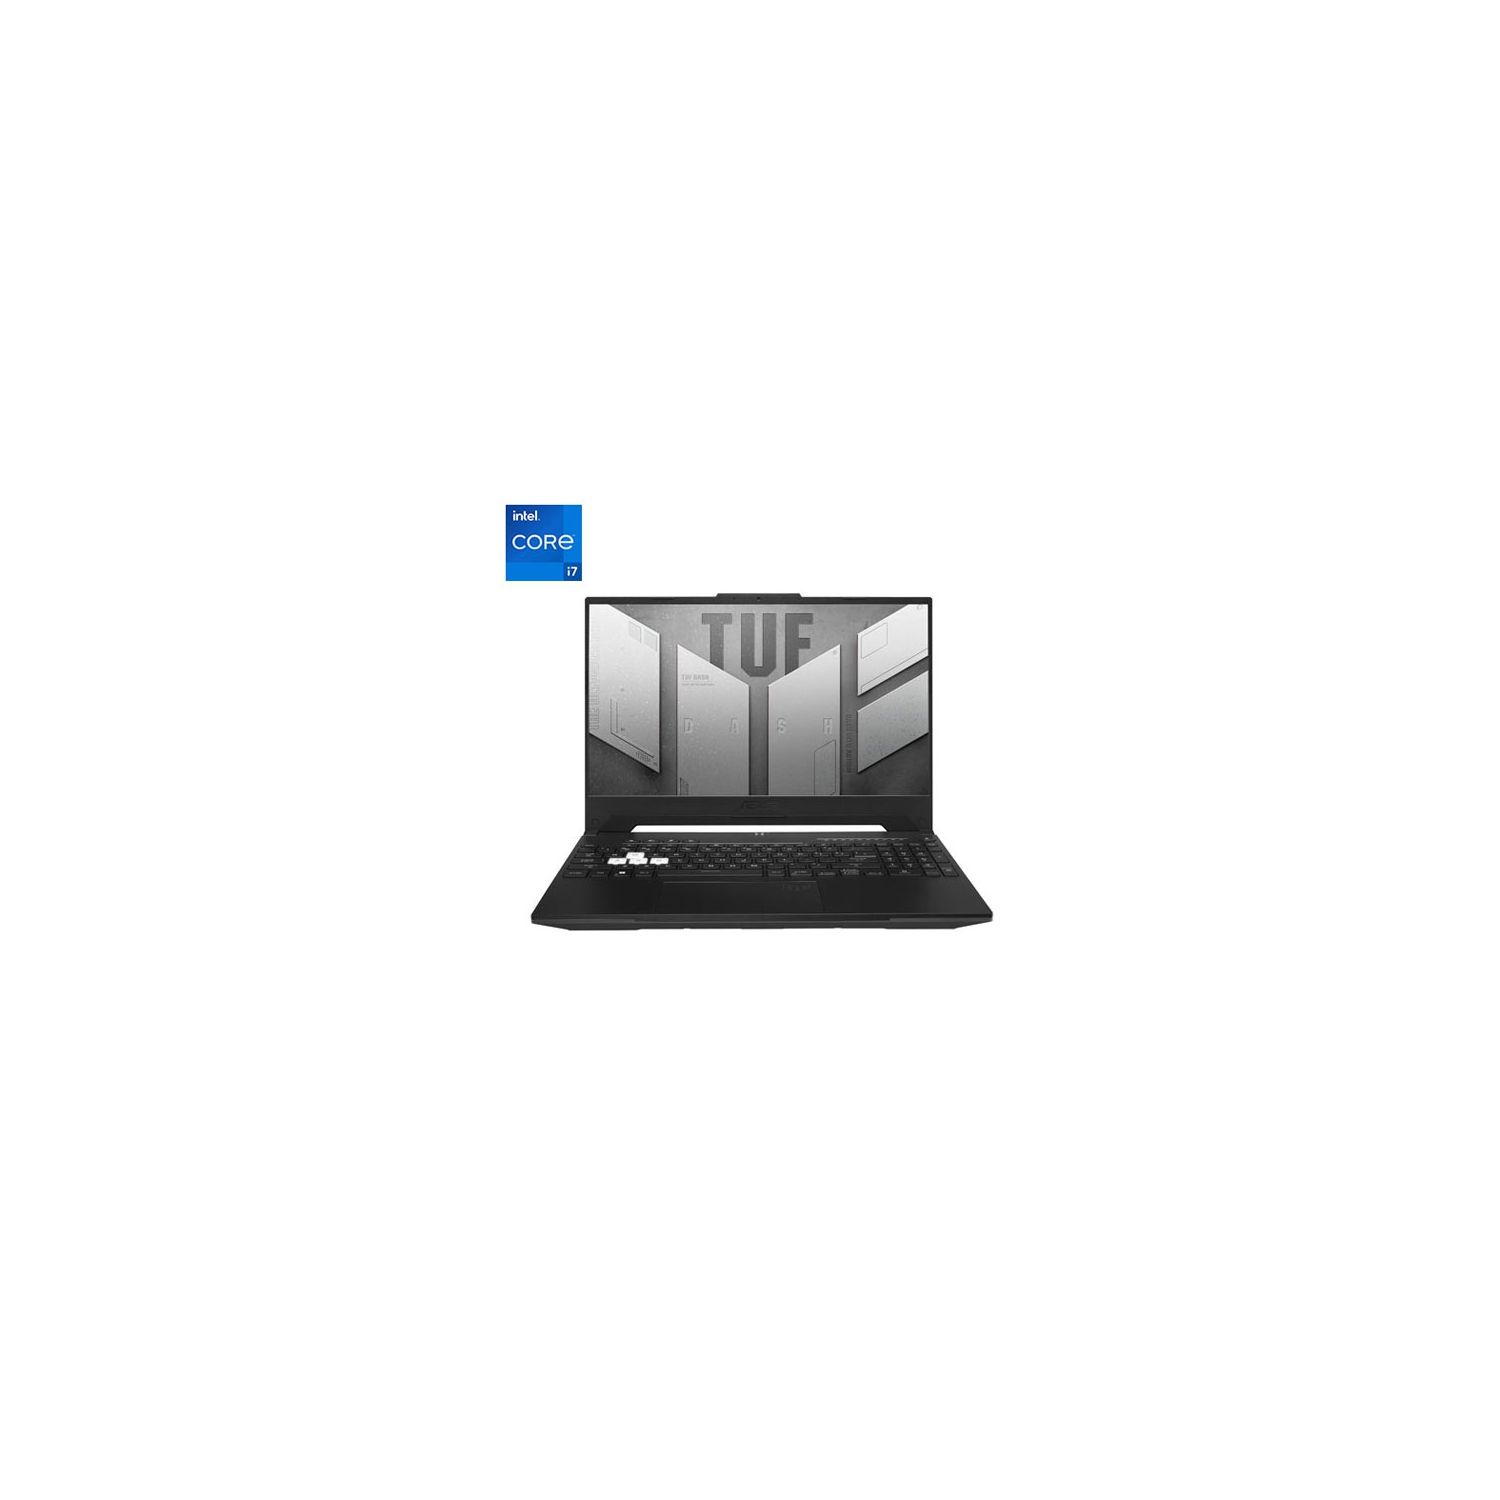 Refurbished (Excellent) - ASUS TUF Dash 15 15.6" Gaming Laptop (Intel Core i7-12650H/512GB SSD/16GB RAM/GeForce RTX 3070) - En